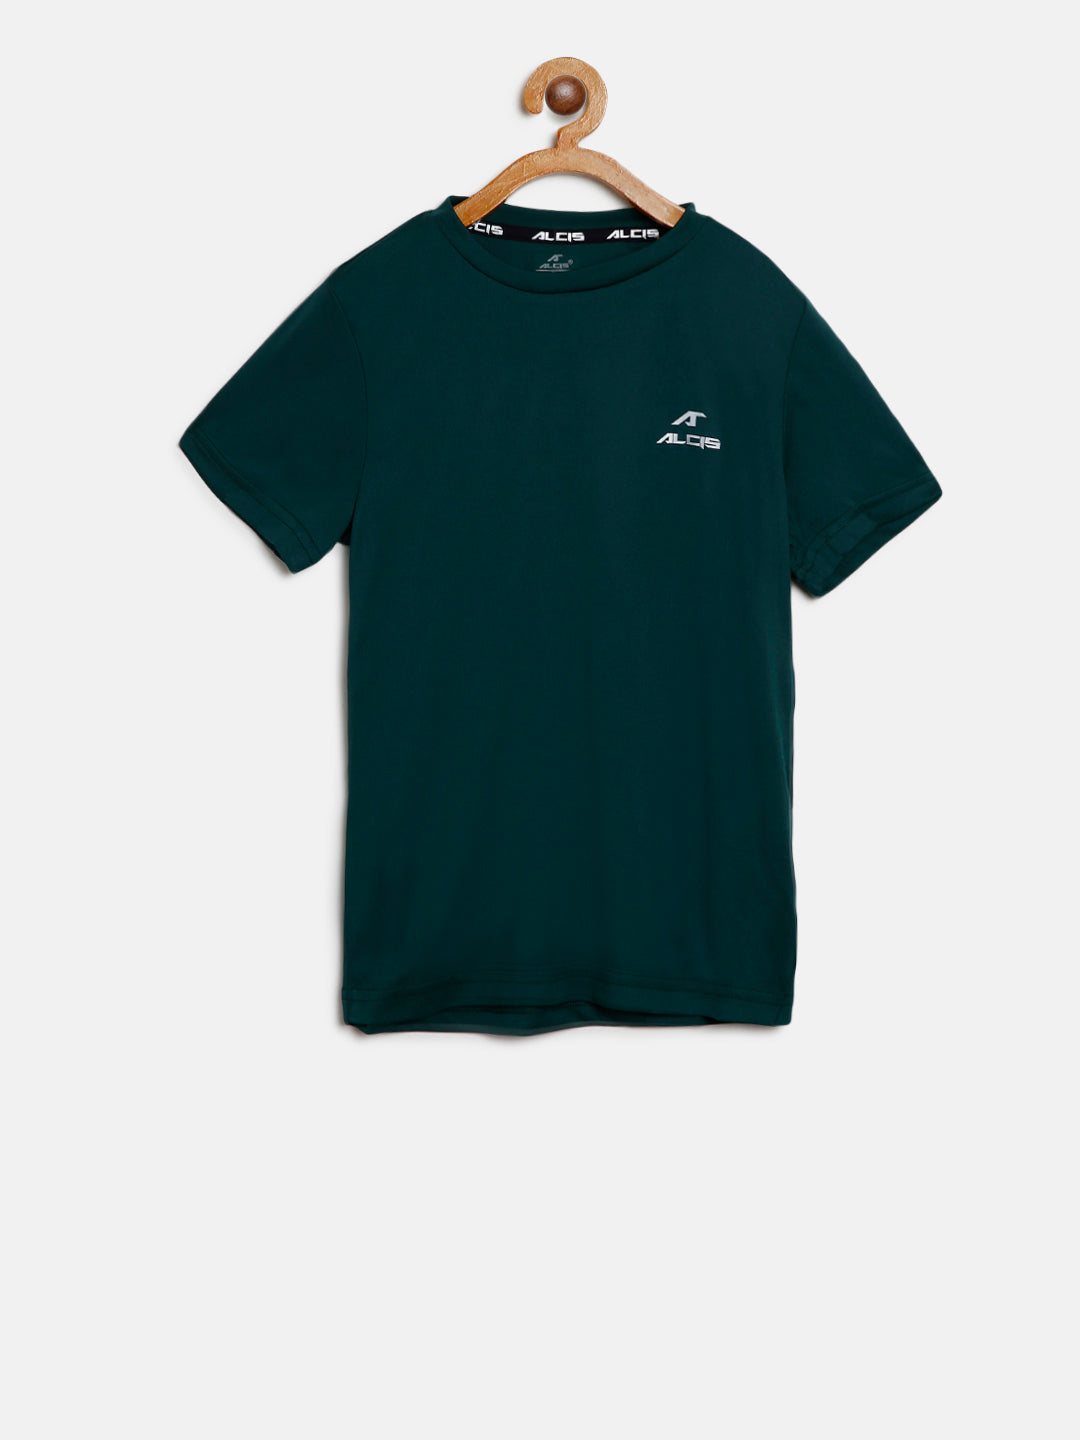 Alcis Boy's Solid Green Tshirt BTE8038-4Y